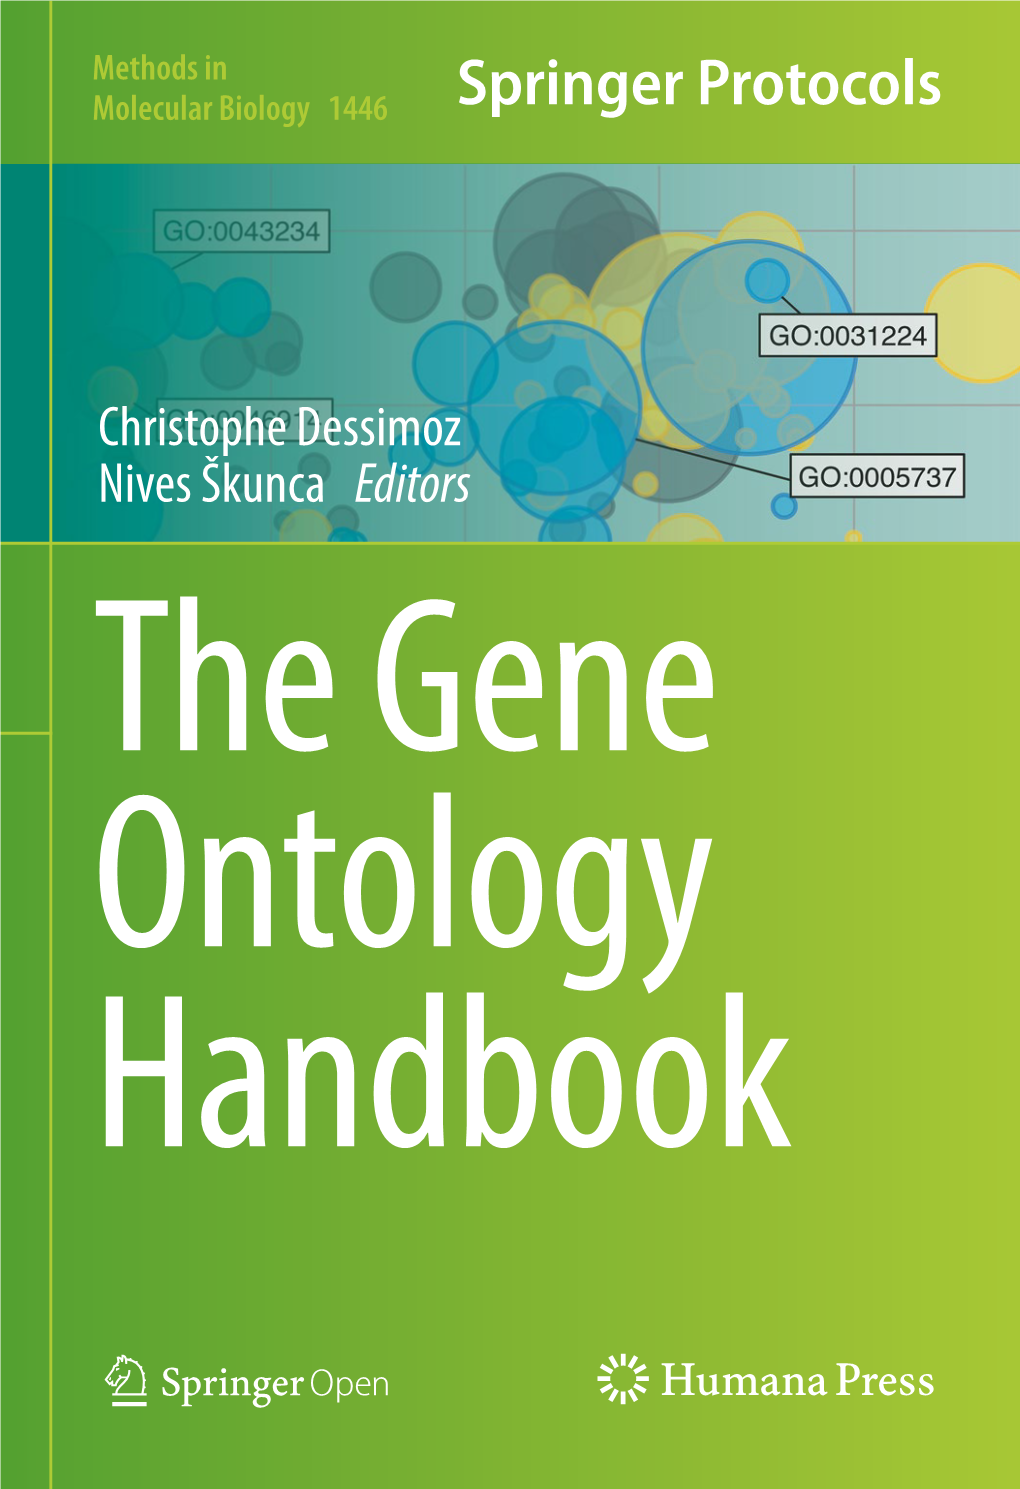 Christophe Dessimoz Nives Škunca Editors the Gene Ontology Handbook M ETHODS in MOLECULAR BIOLOGY